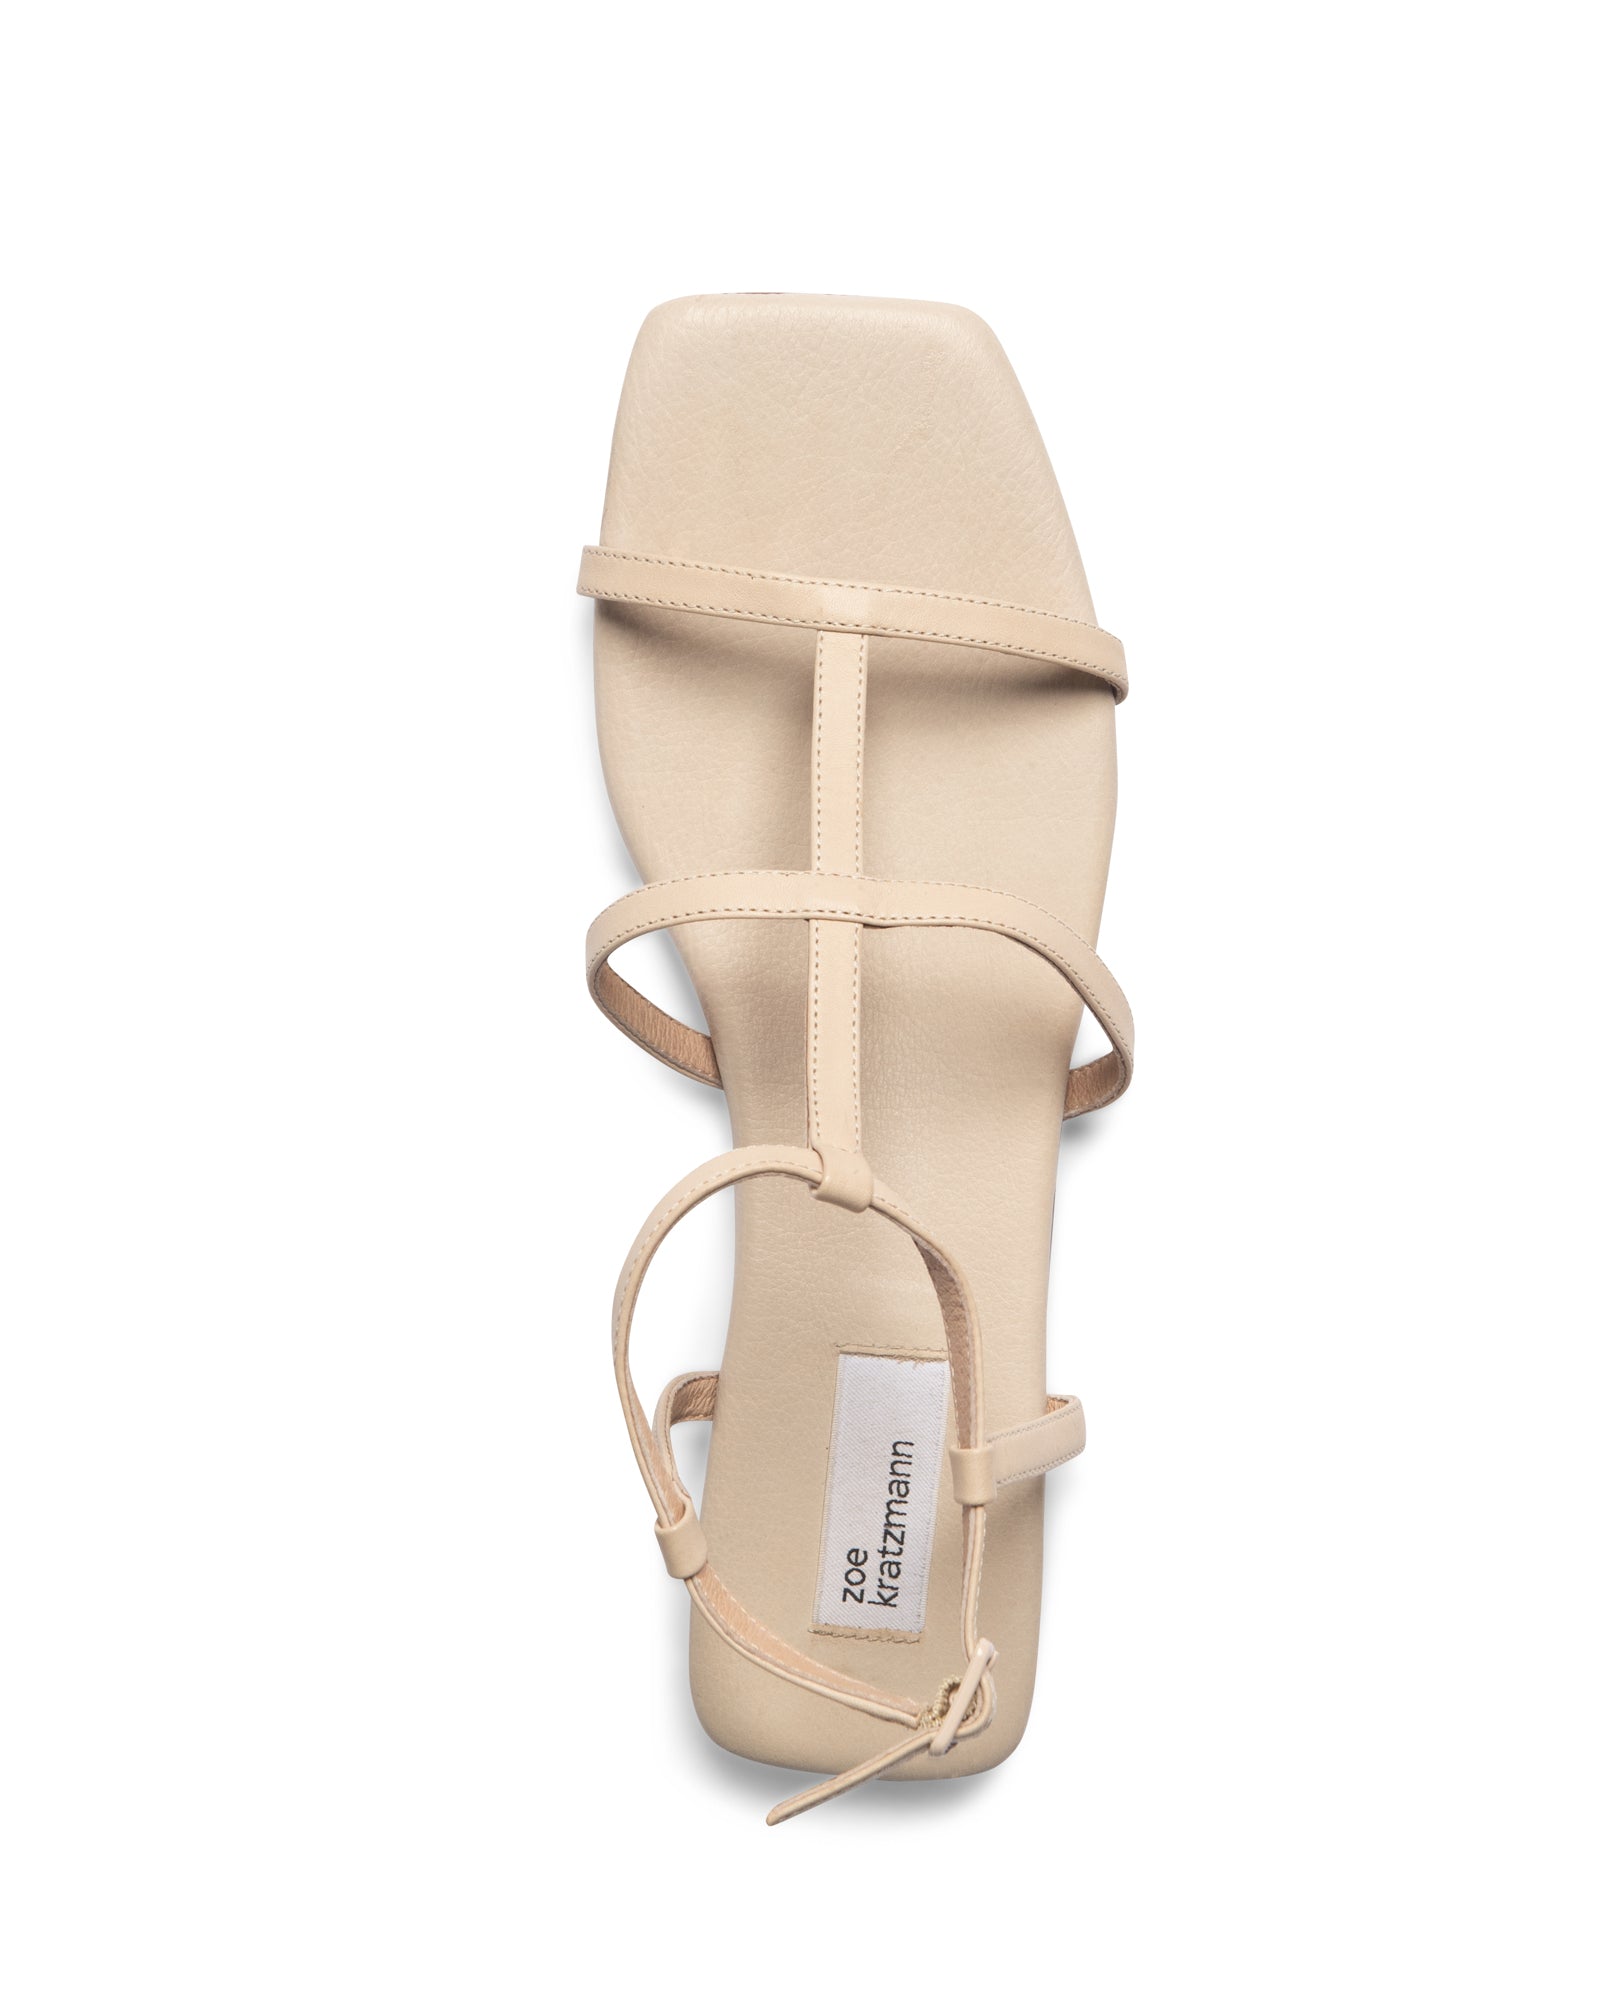 beige, sandal, squared toe shape, slim straps